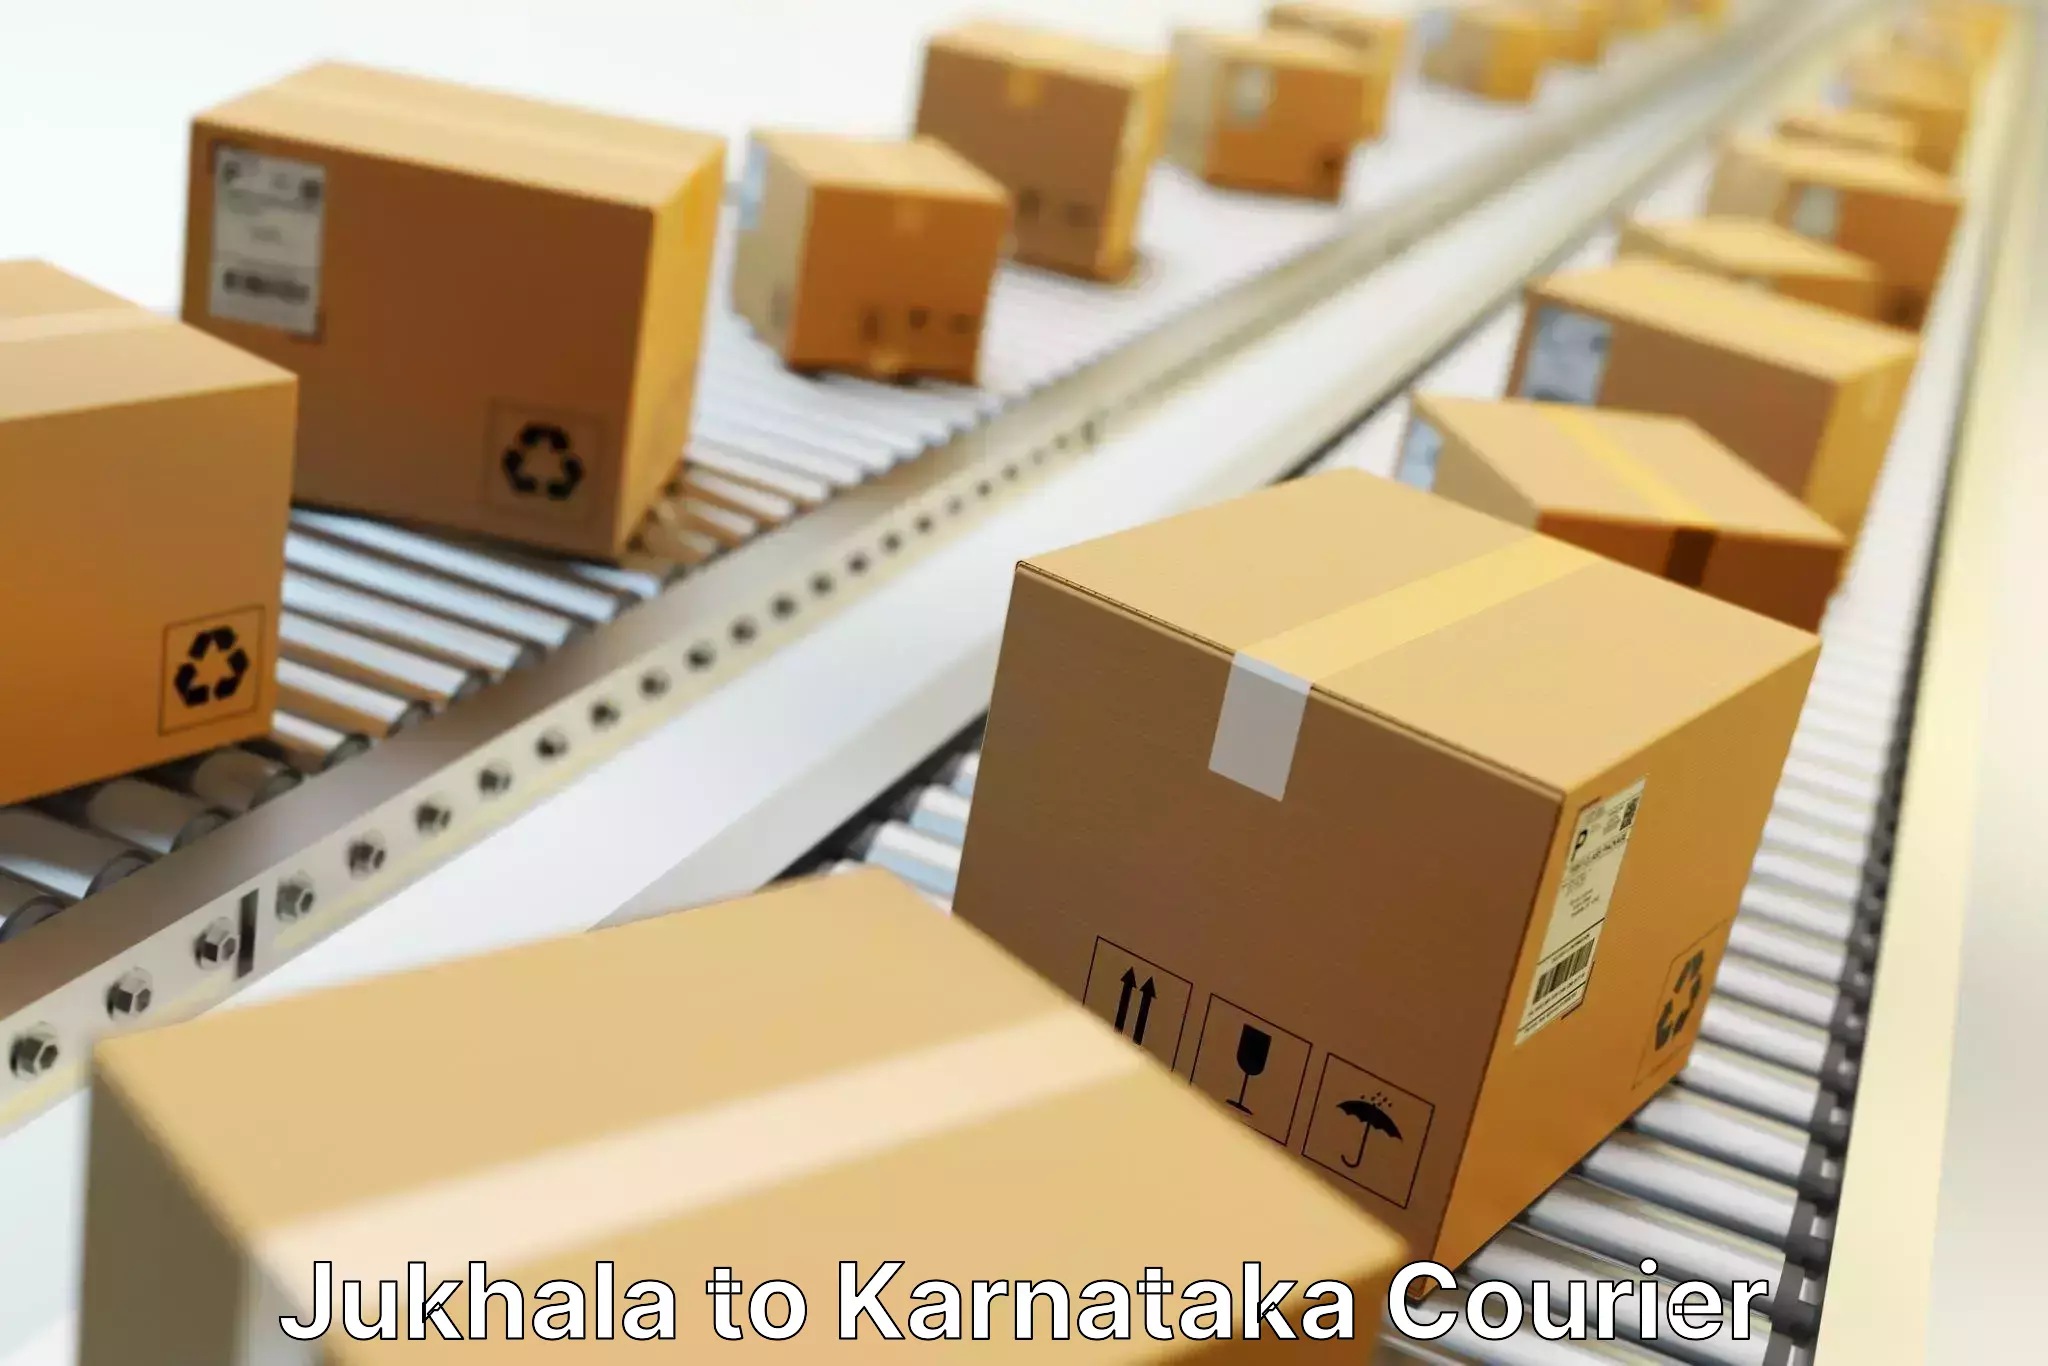 Express delivery capabilities Jukhala to Kotturu